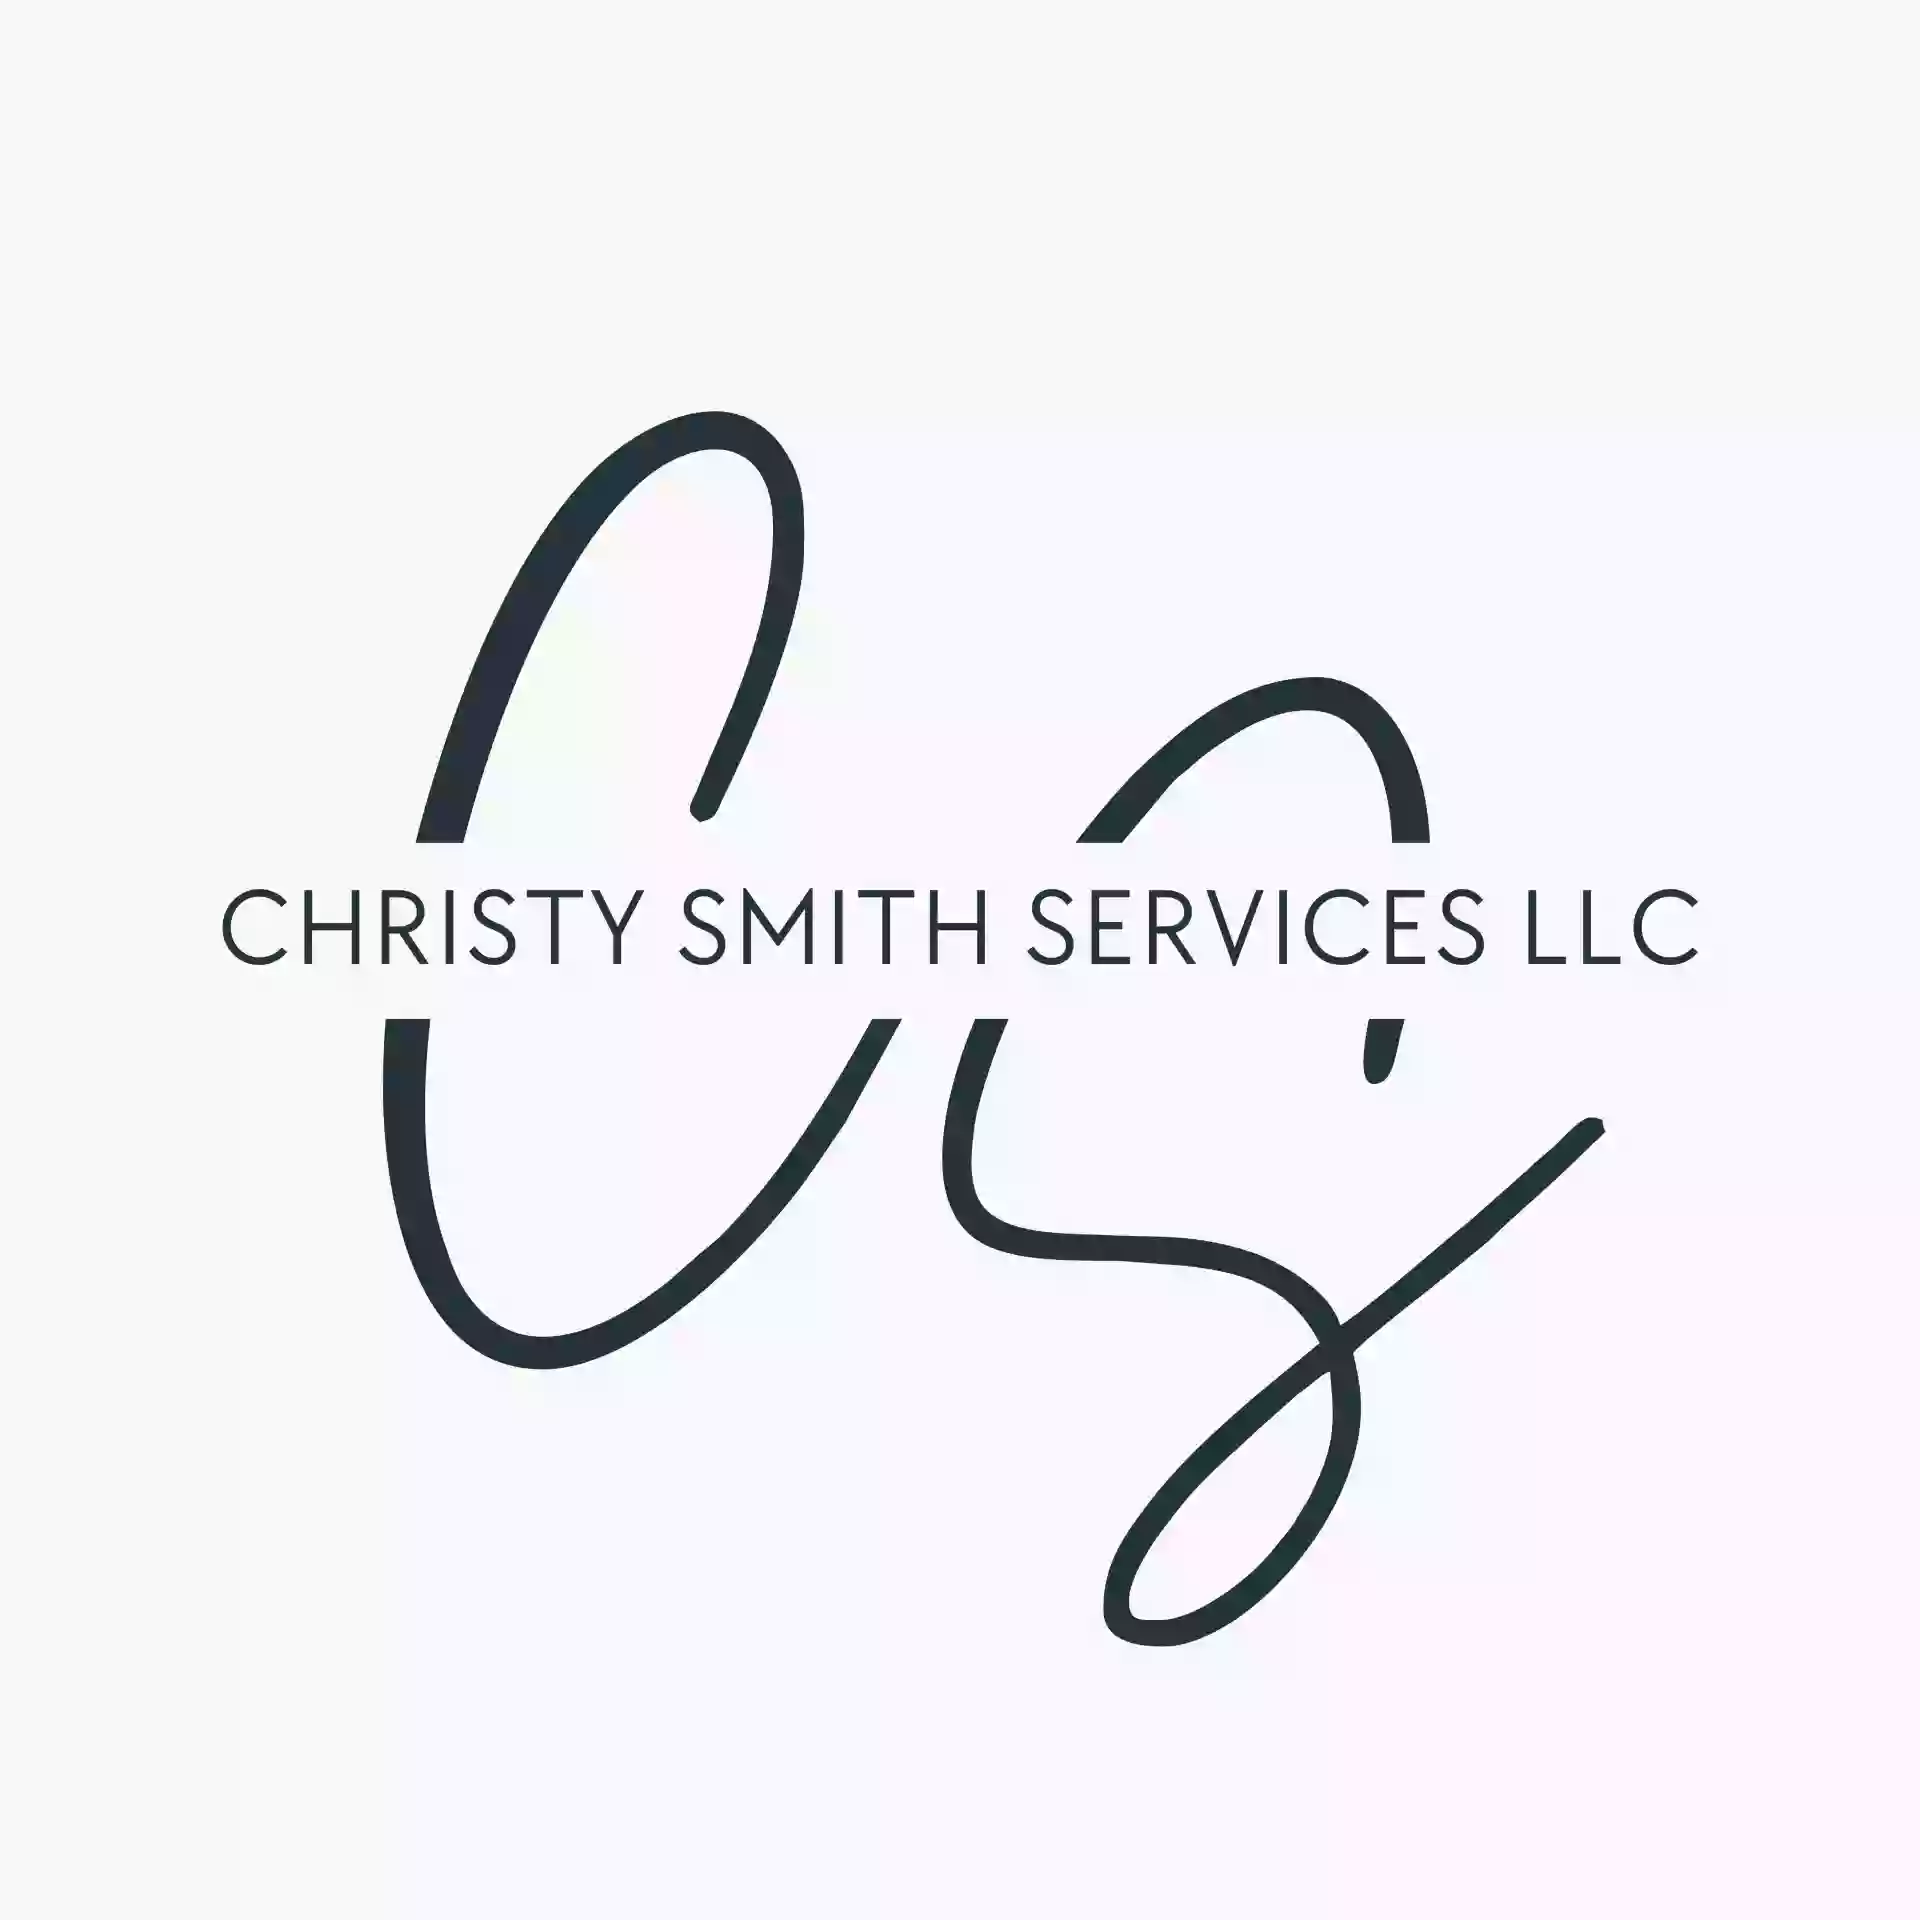 Christy Smith Services LLC